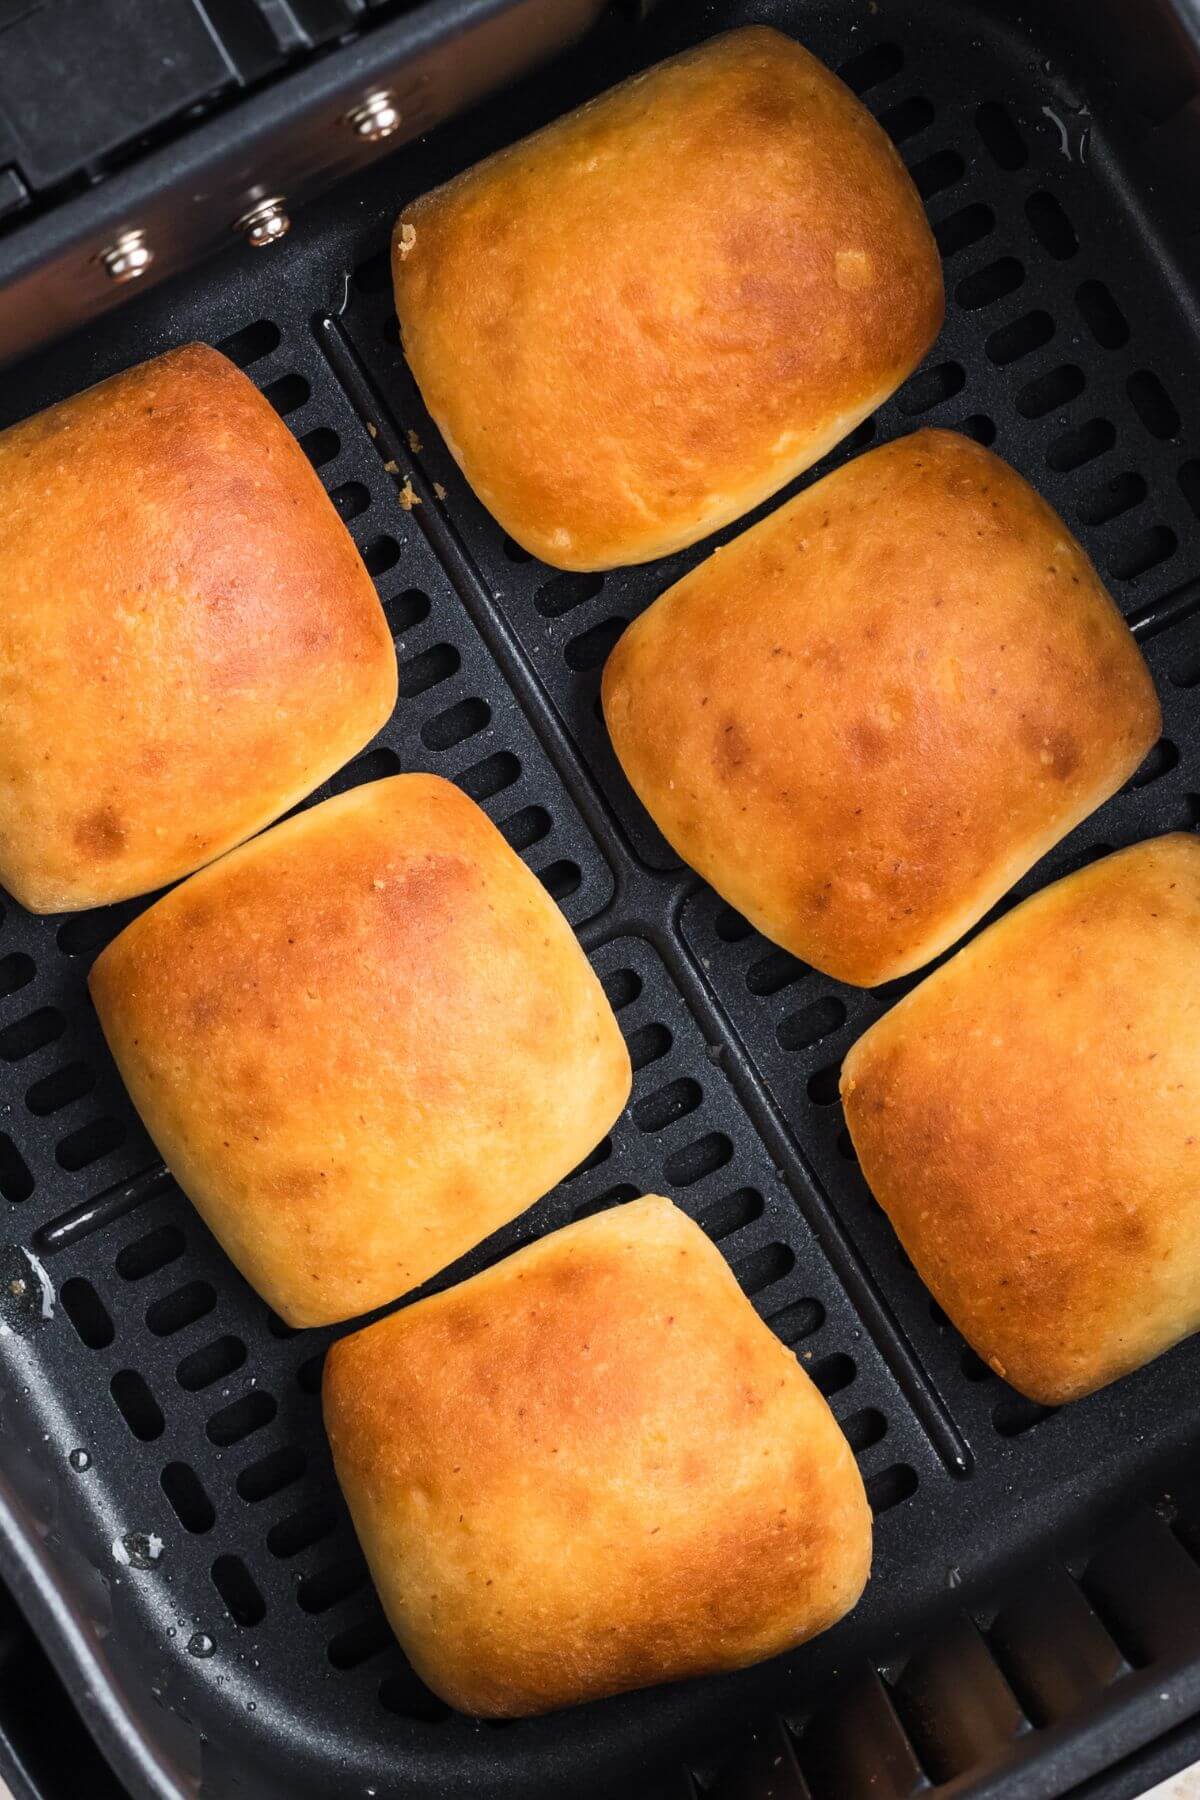 Golden brown cooked rolls in the air fryer basket. 